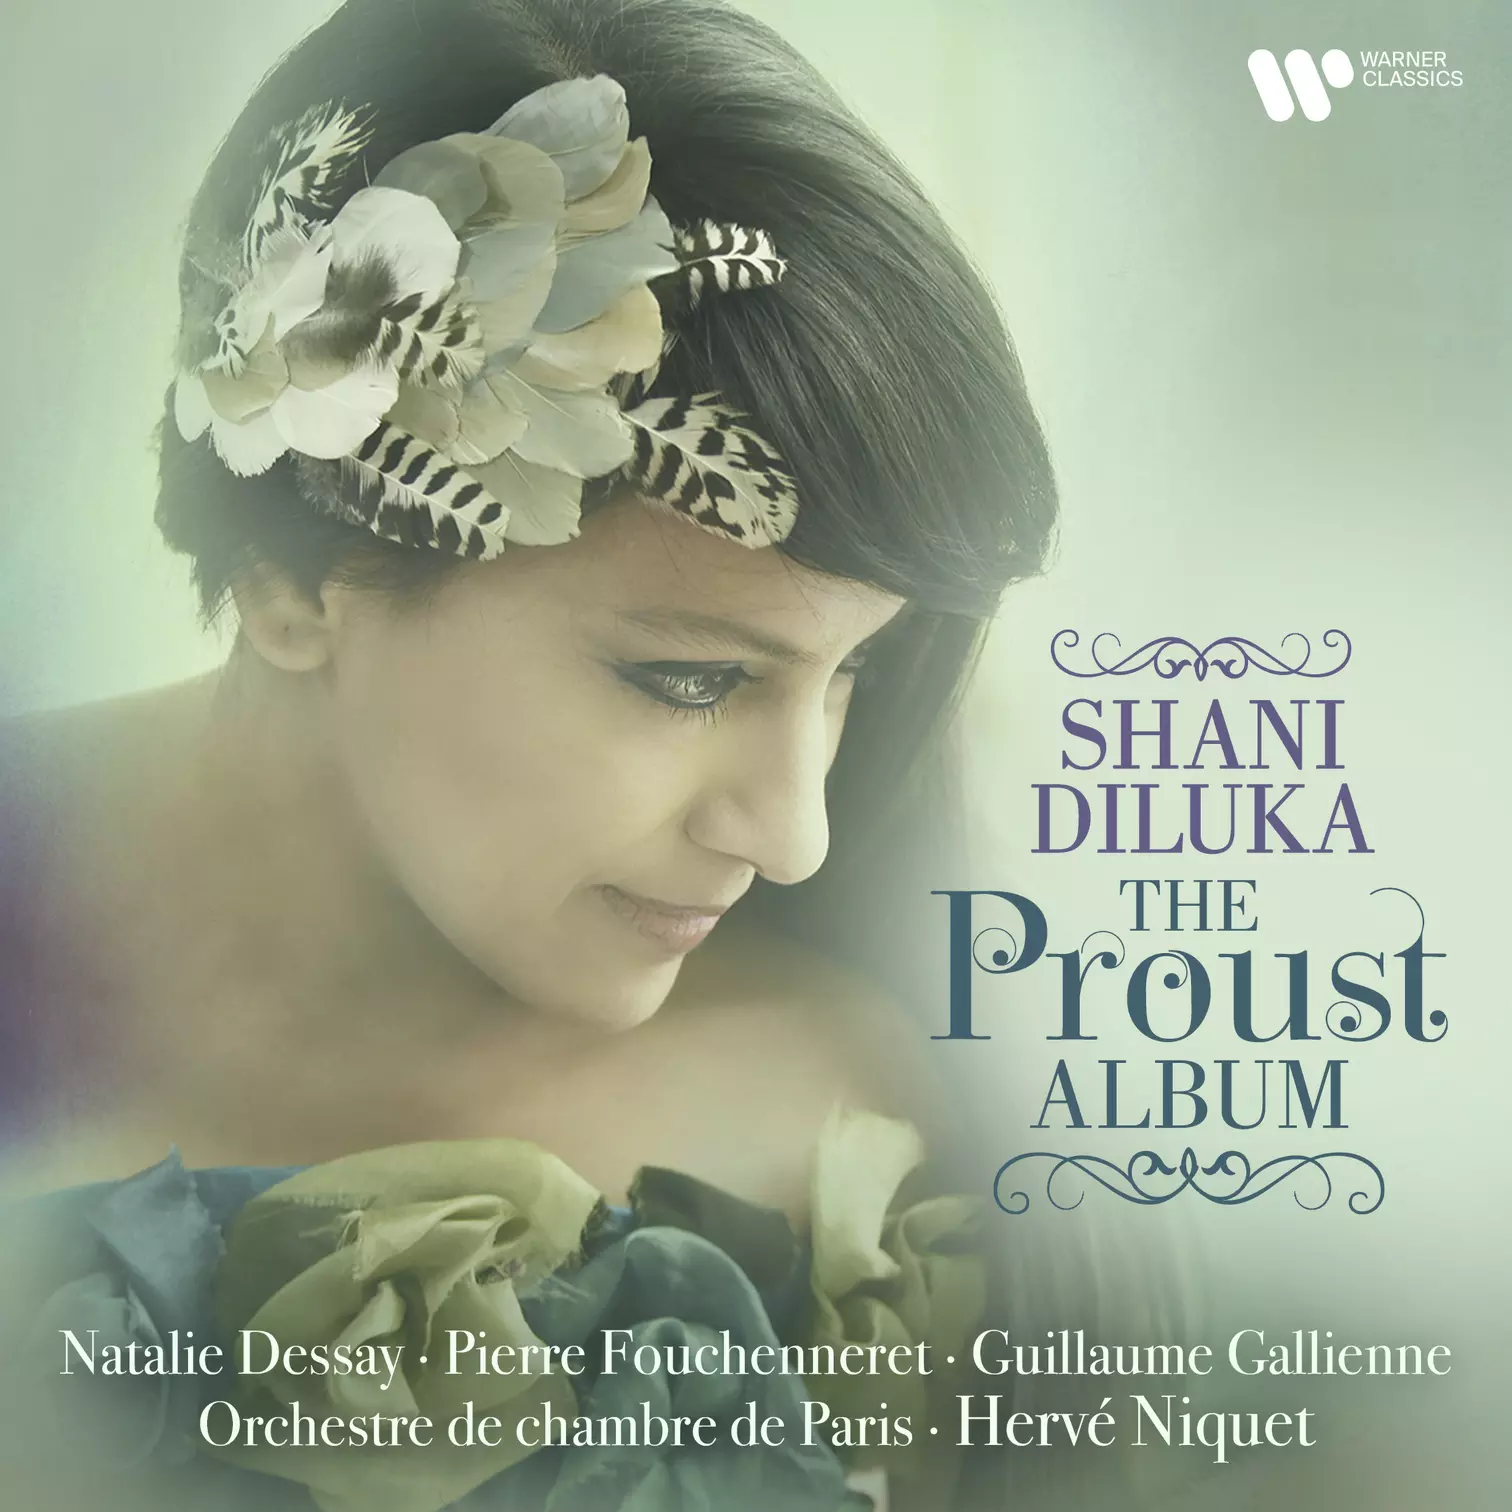 Shani Diluka The Proust Album